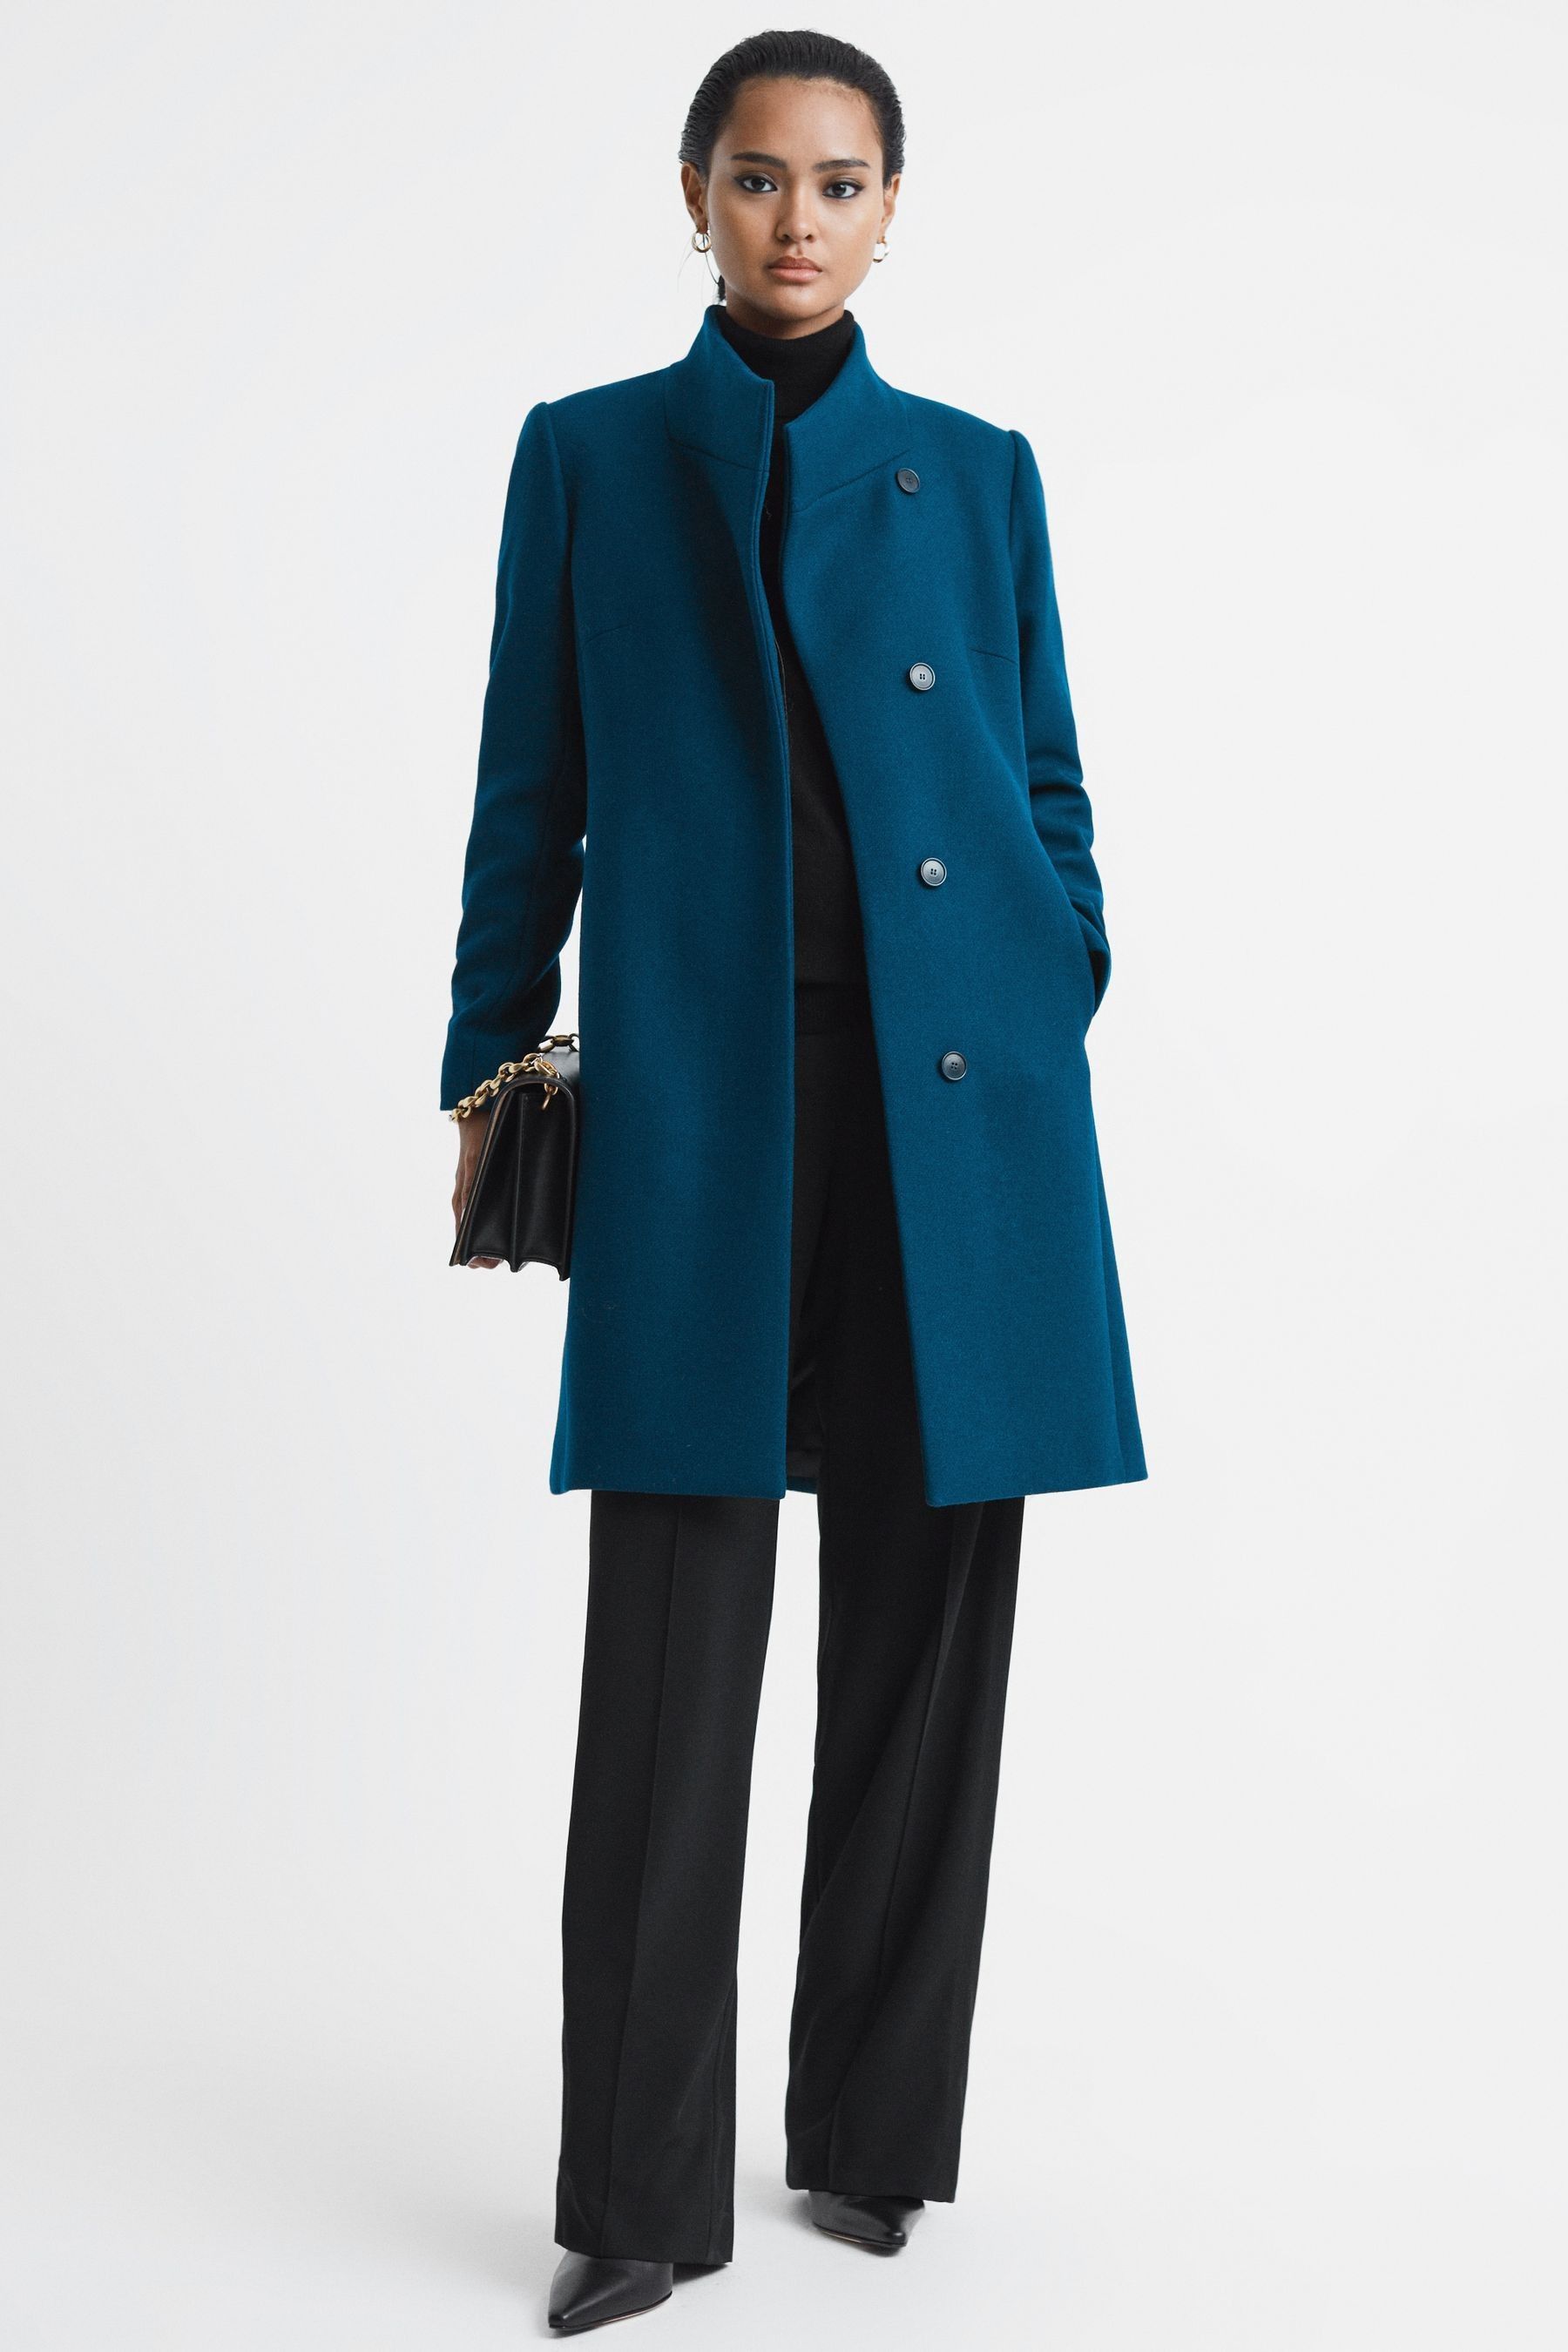 Reiss Mia - Teal Wool Blend Mid-length Coat, Us 0